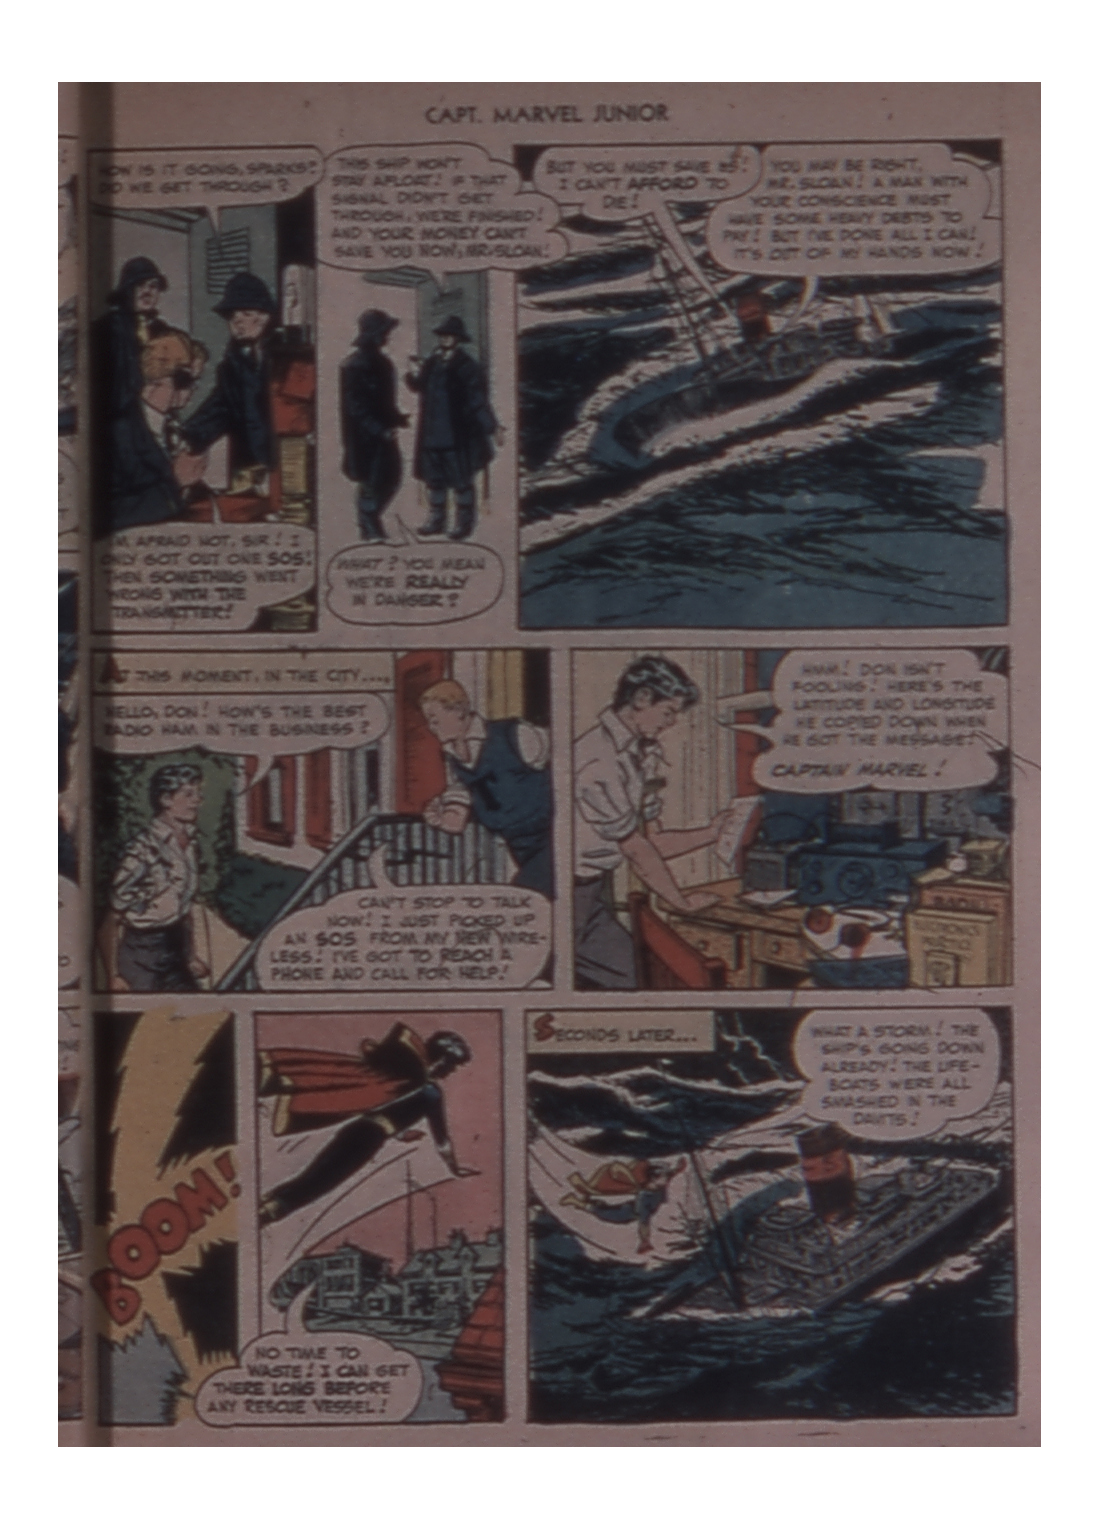 Read online Captain Marvel, Jr. comic -  Issue #77 - 47